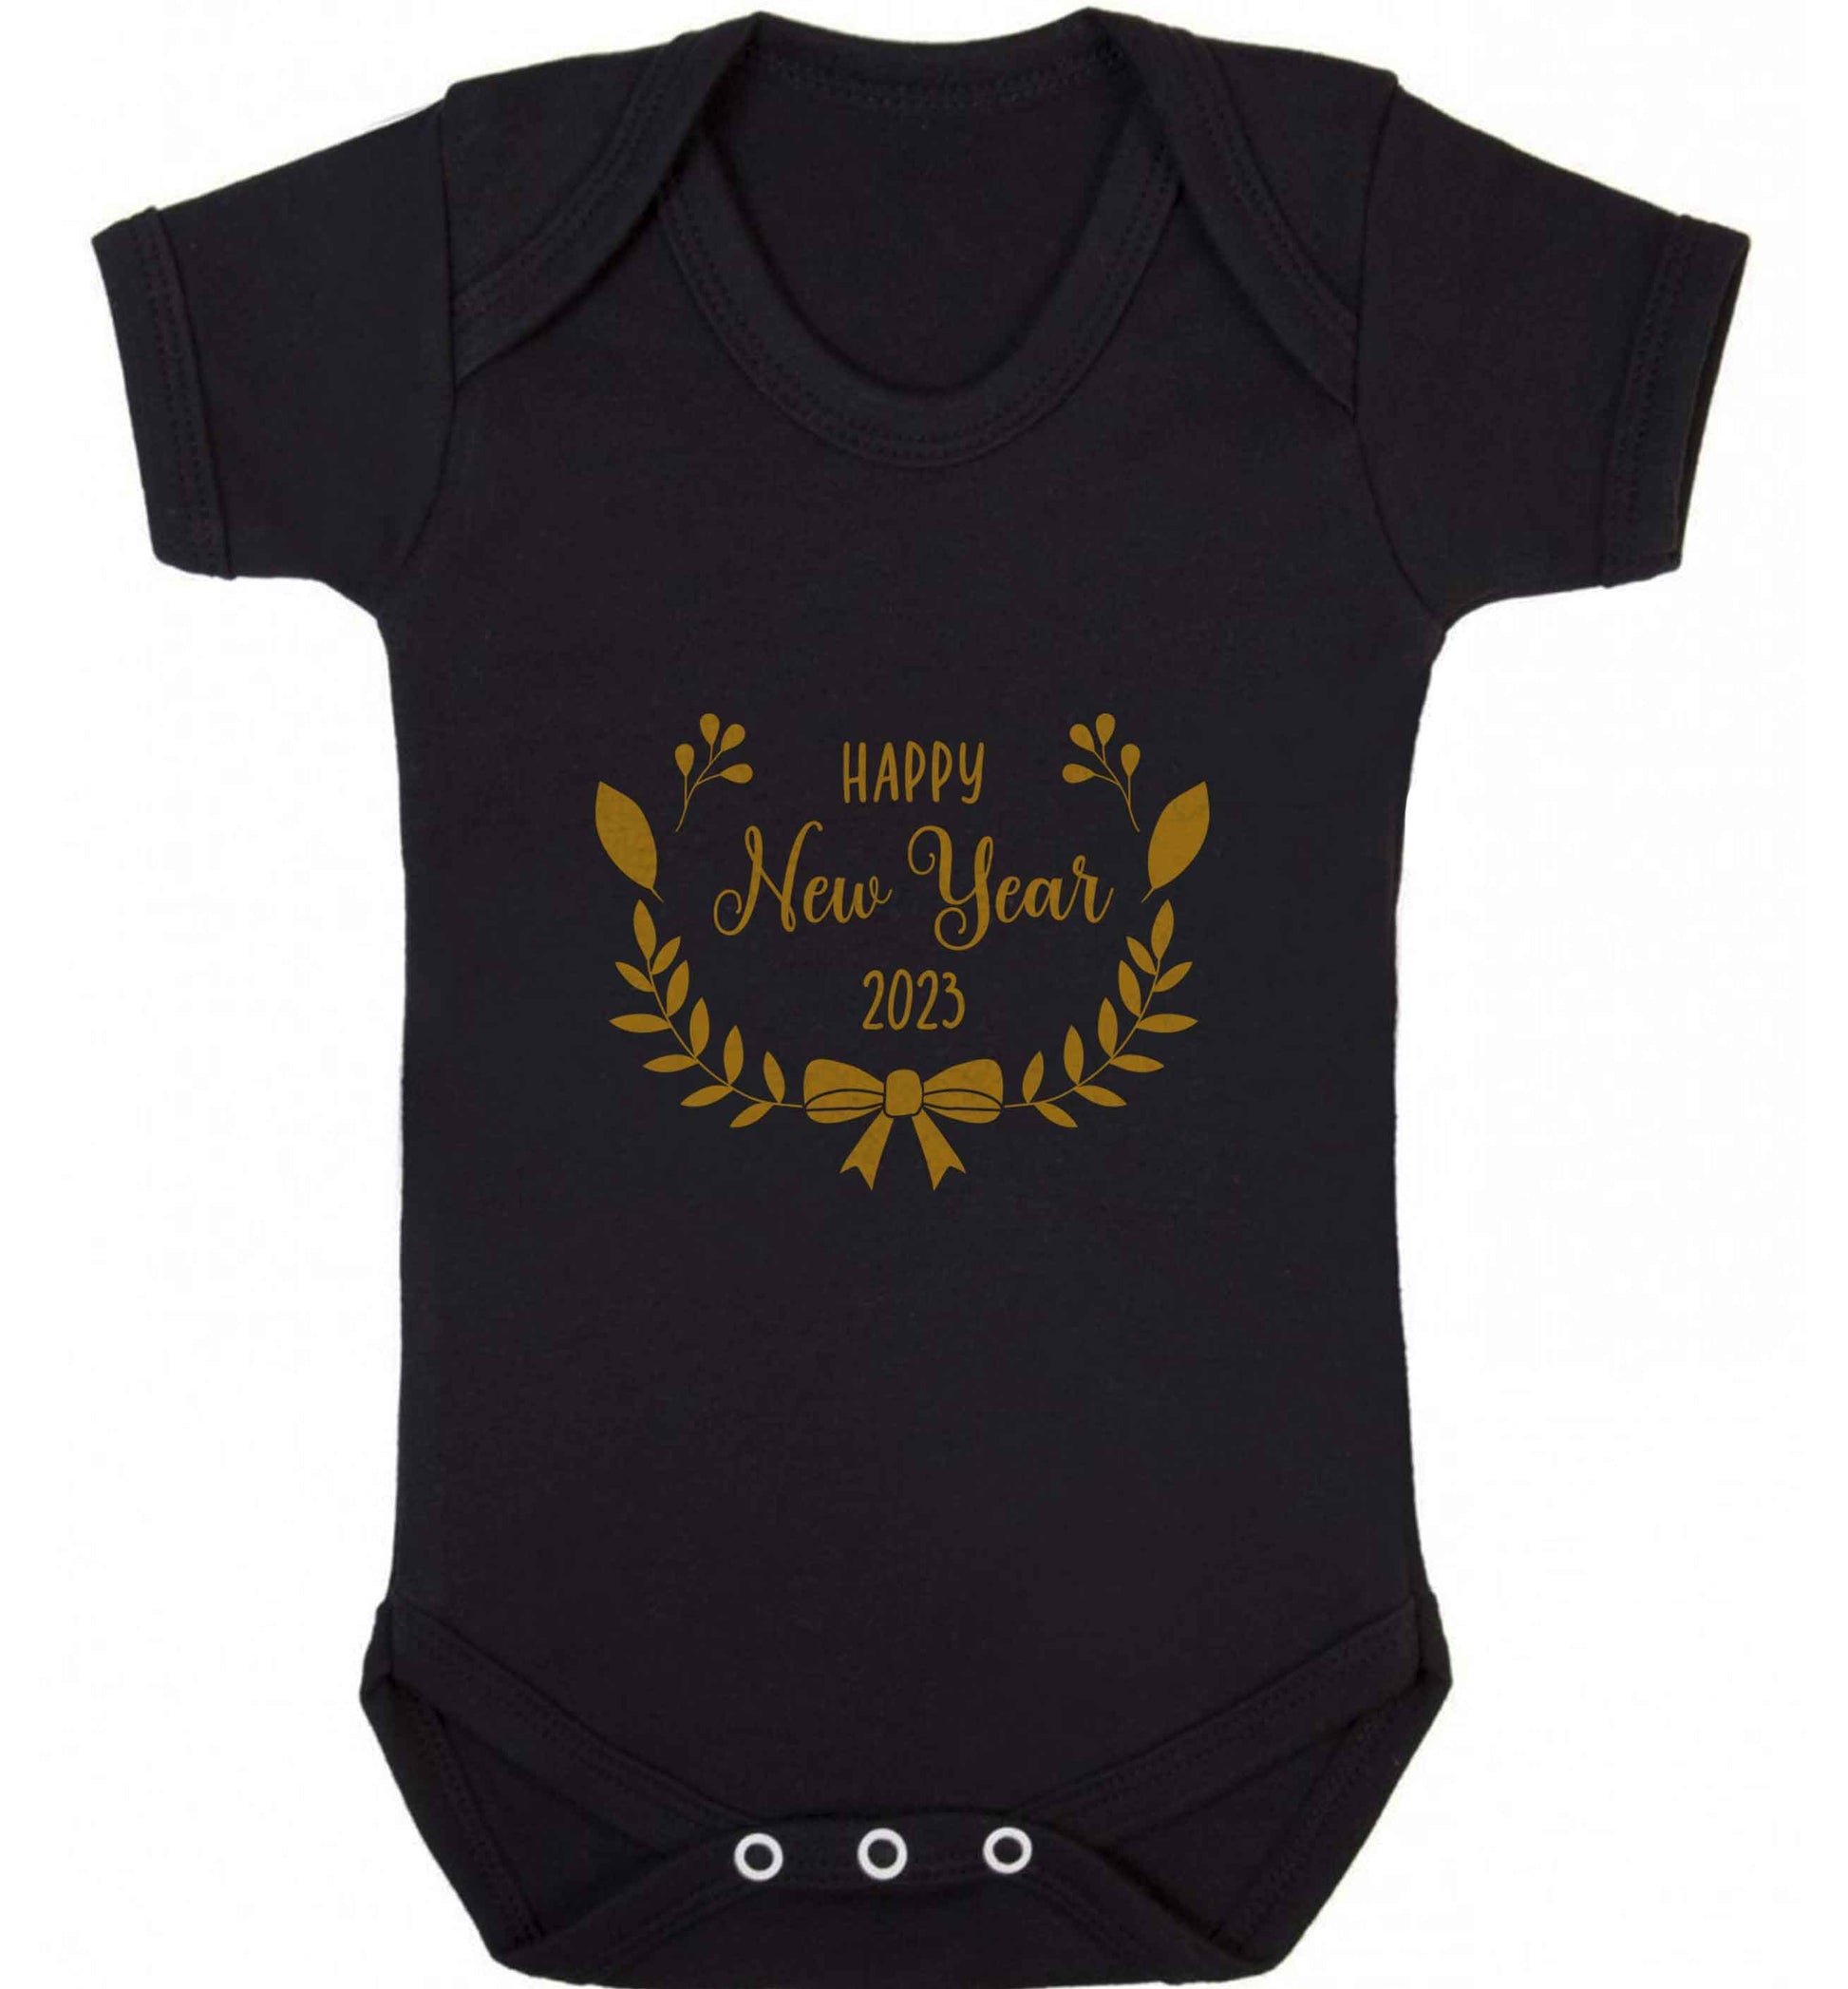 Happy New Year 2023 baby vest black 18-24 months